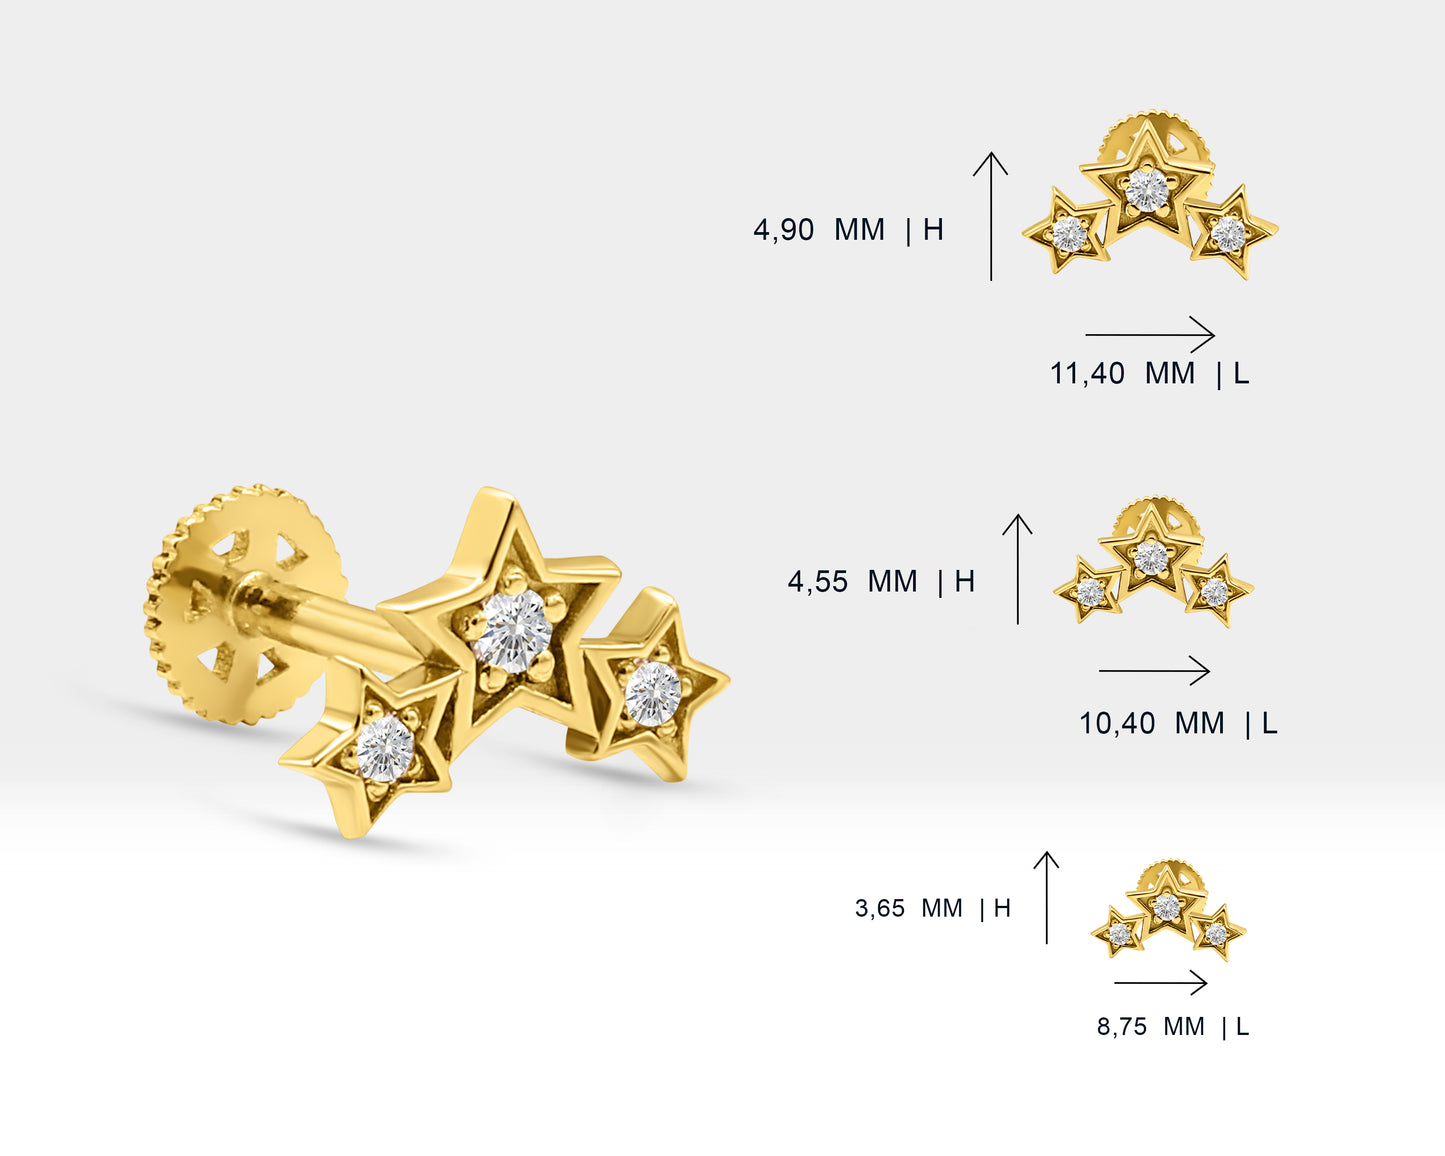 Triple Star Piercing with Diamond Screw Back Piercing in 14K Solid Gold Celestial Cartilage Piercing 16G(1.2mm)